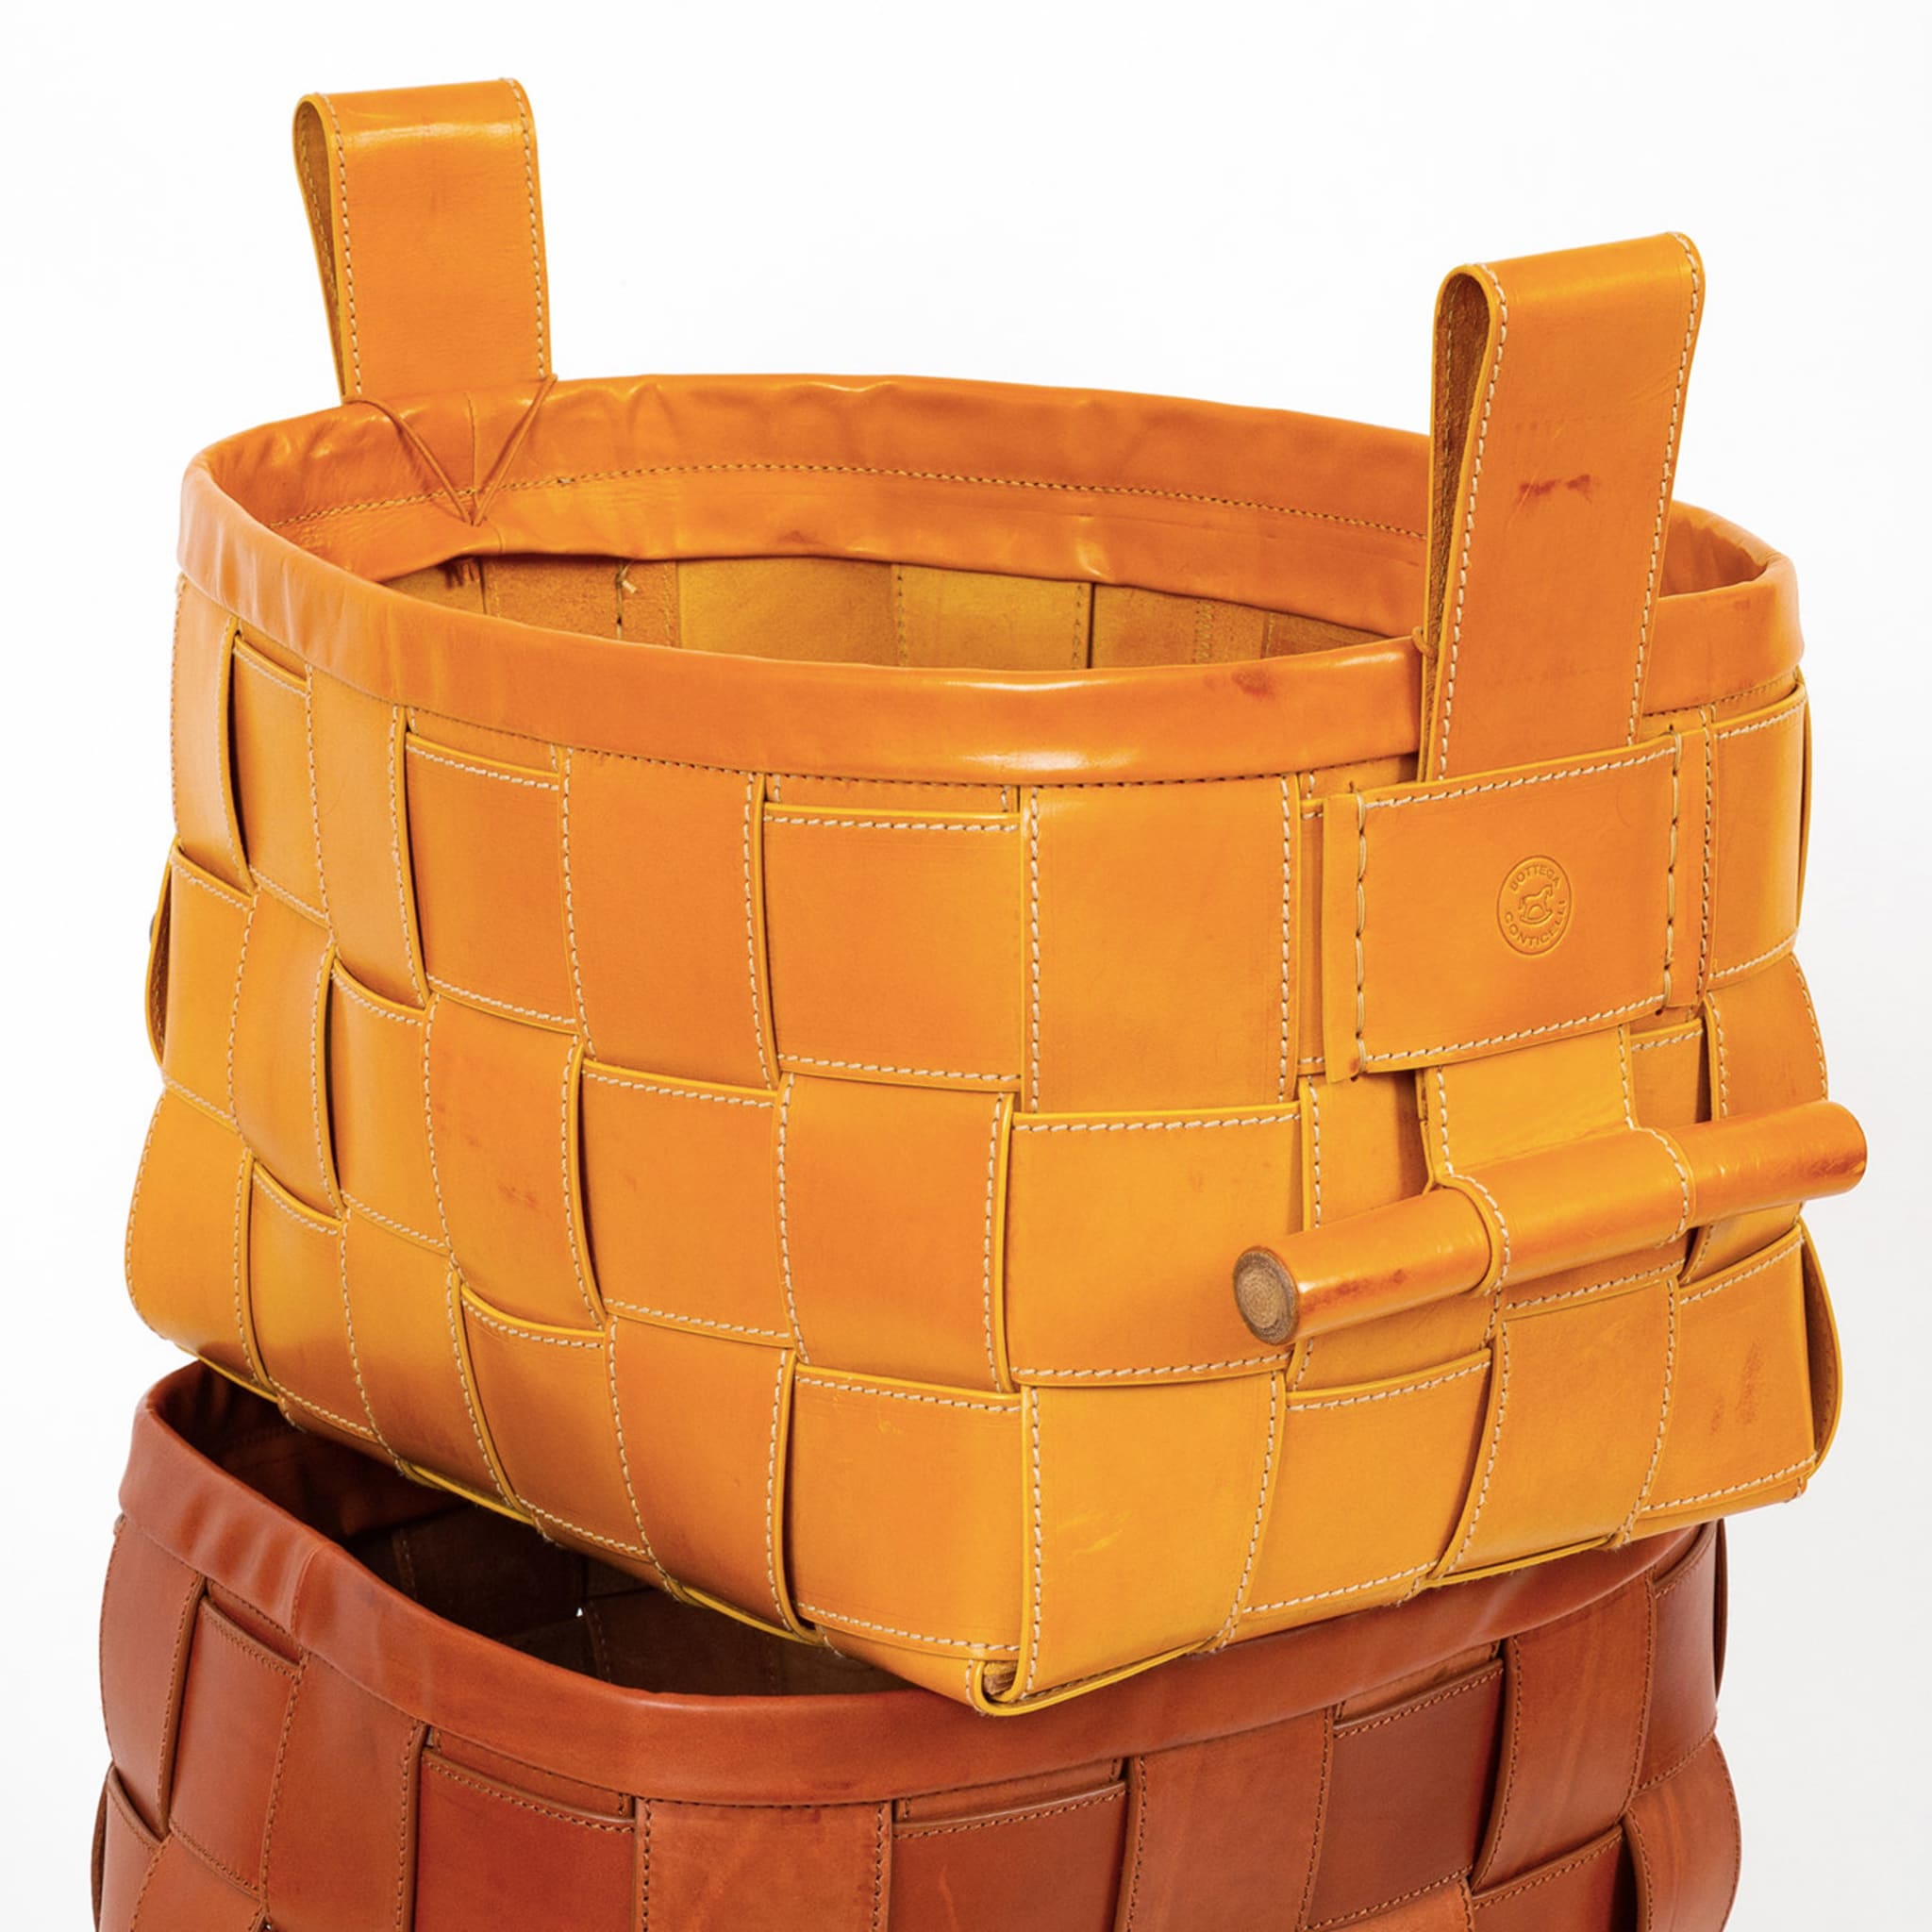 Woven Leather Basket Mustard Yellow - Alternative view 1